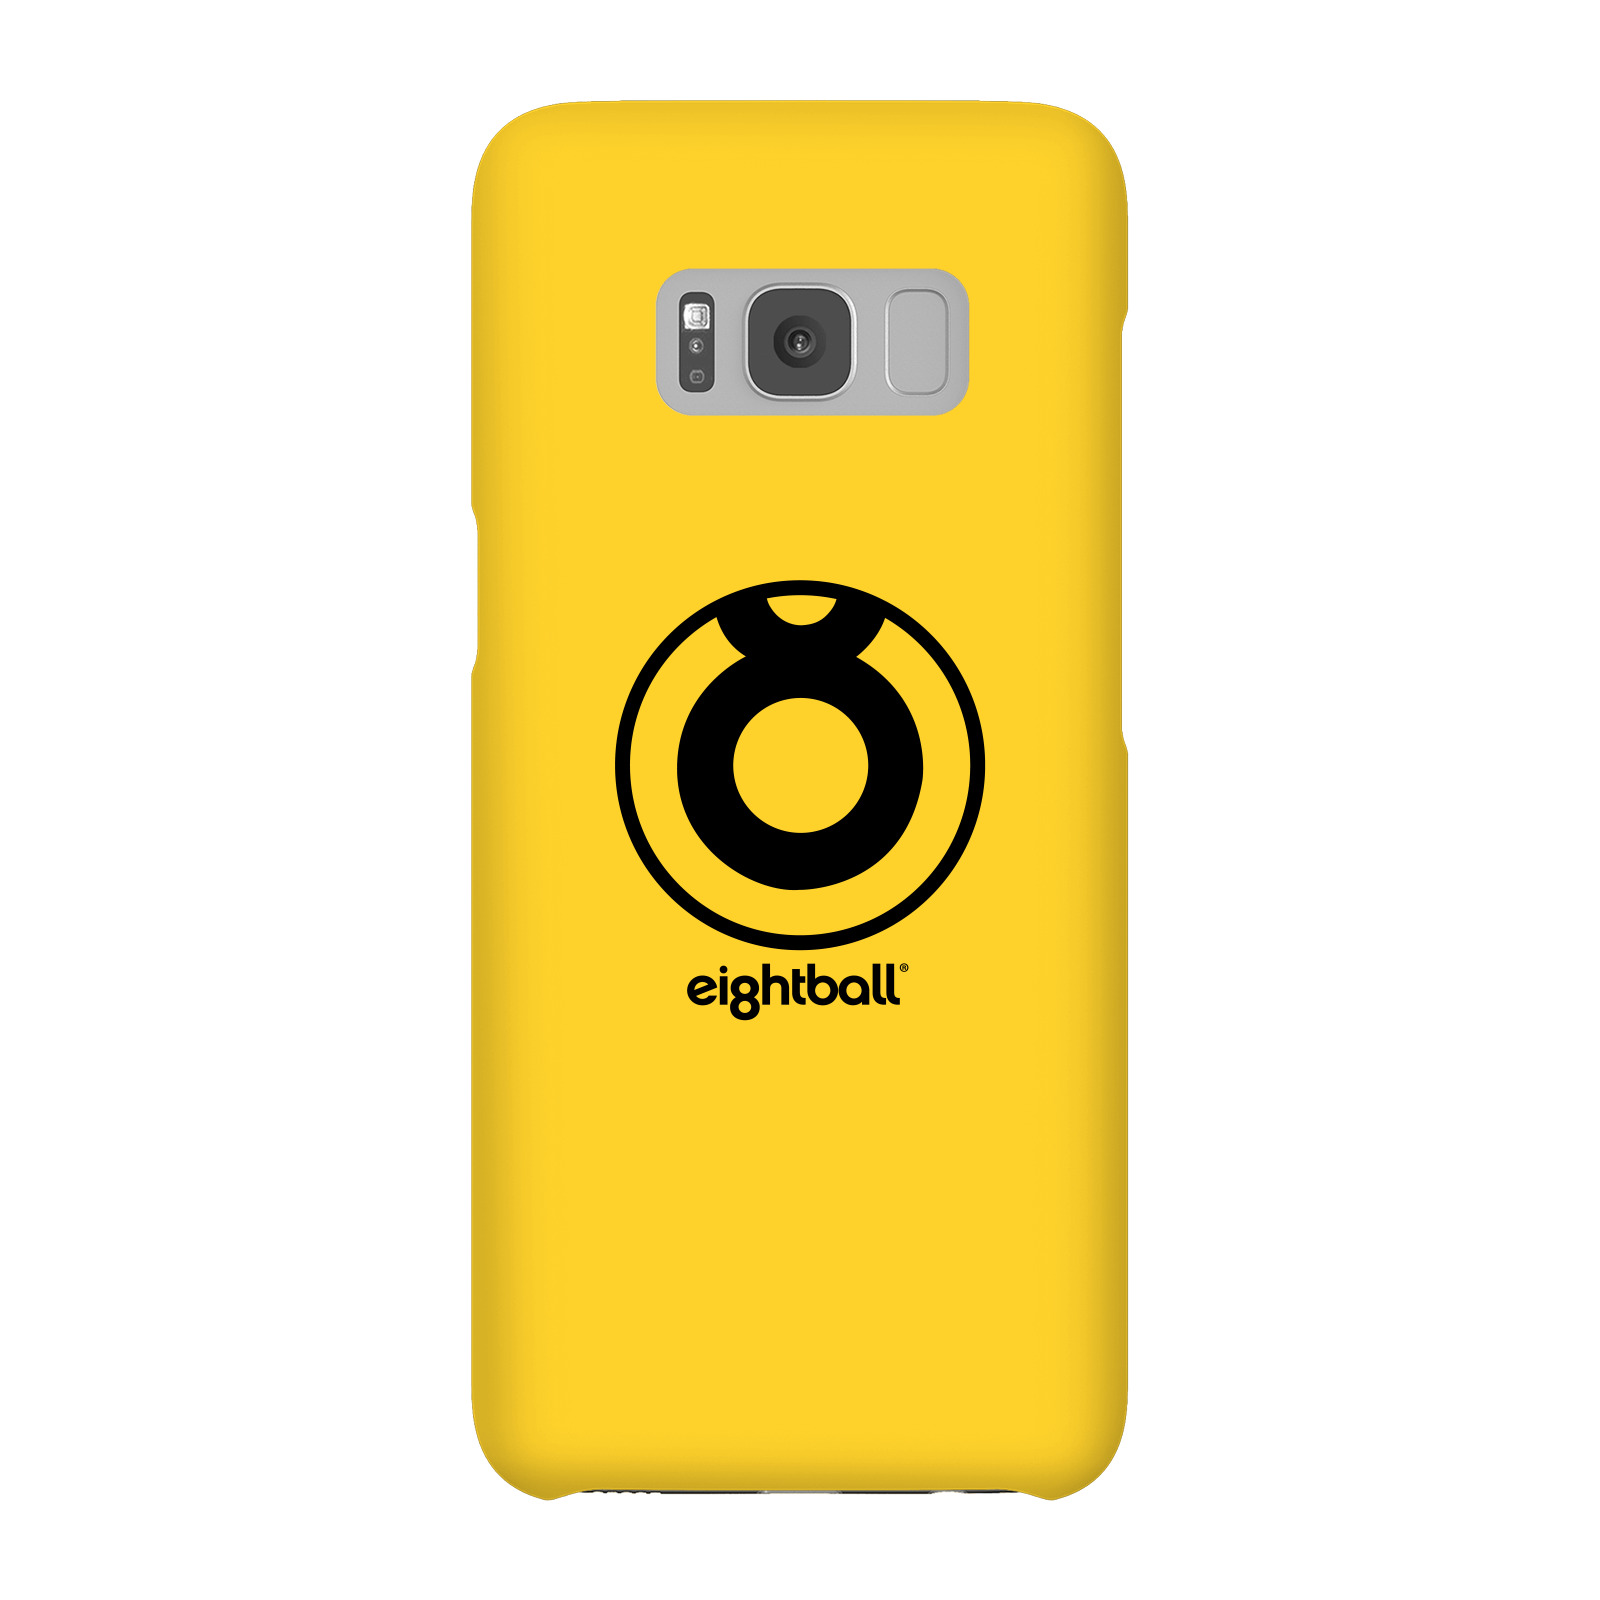 Funda Móvil Ei8htball Large Circle Logo para iPhone y Android - Samsung S8 - Carcasa rígida - Mate